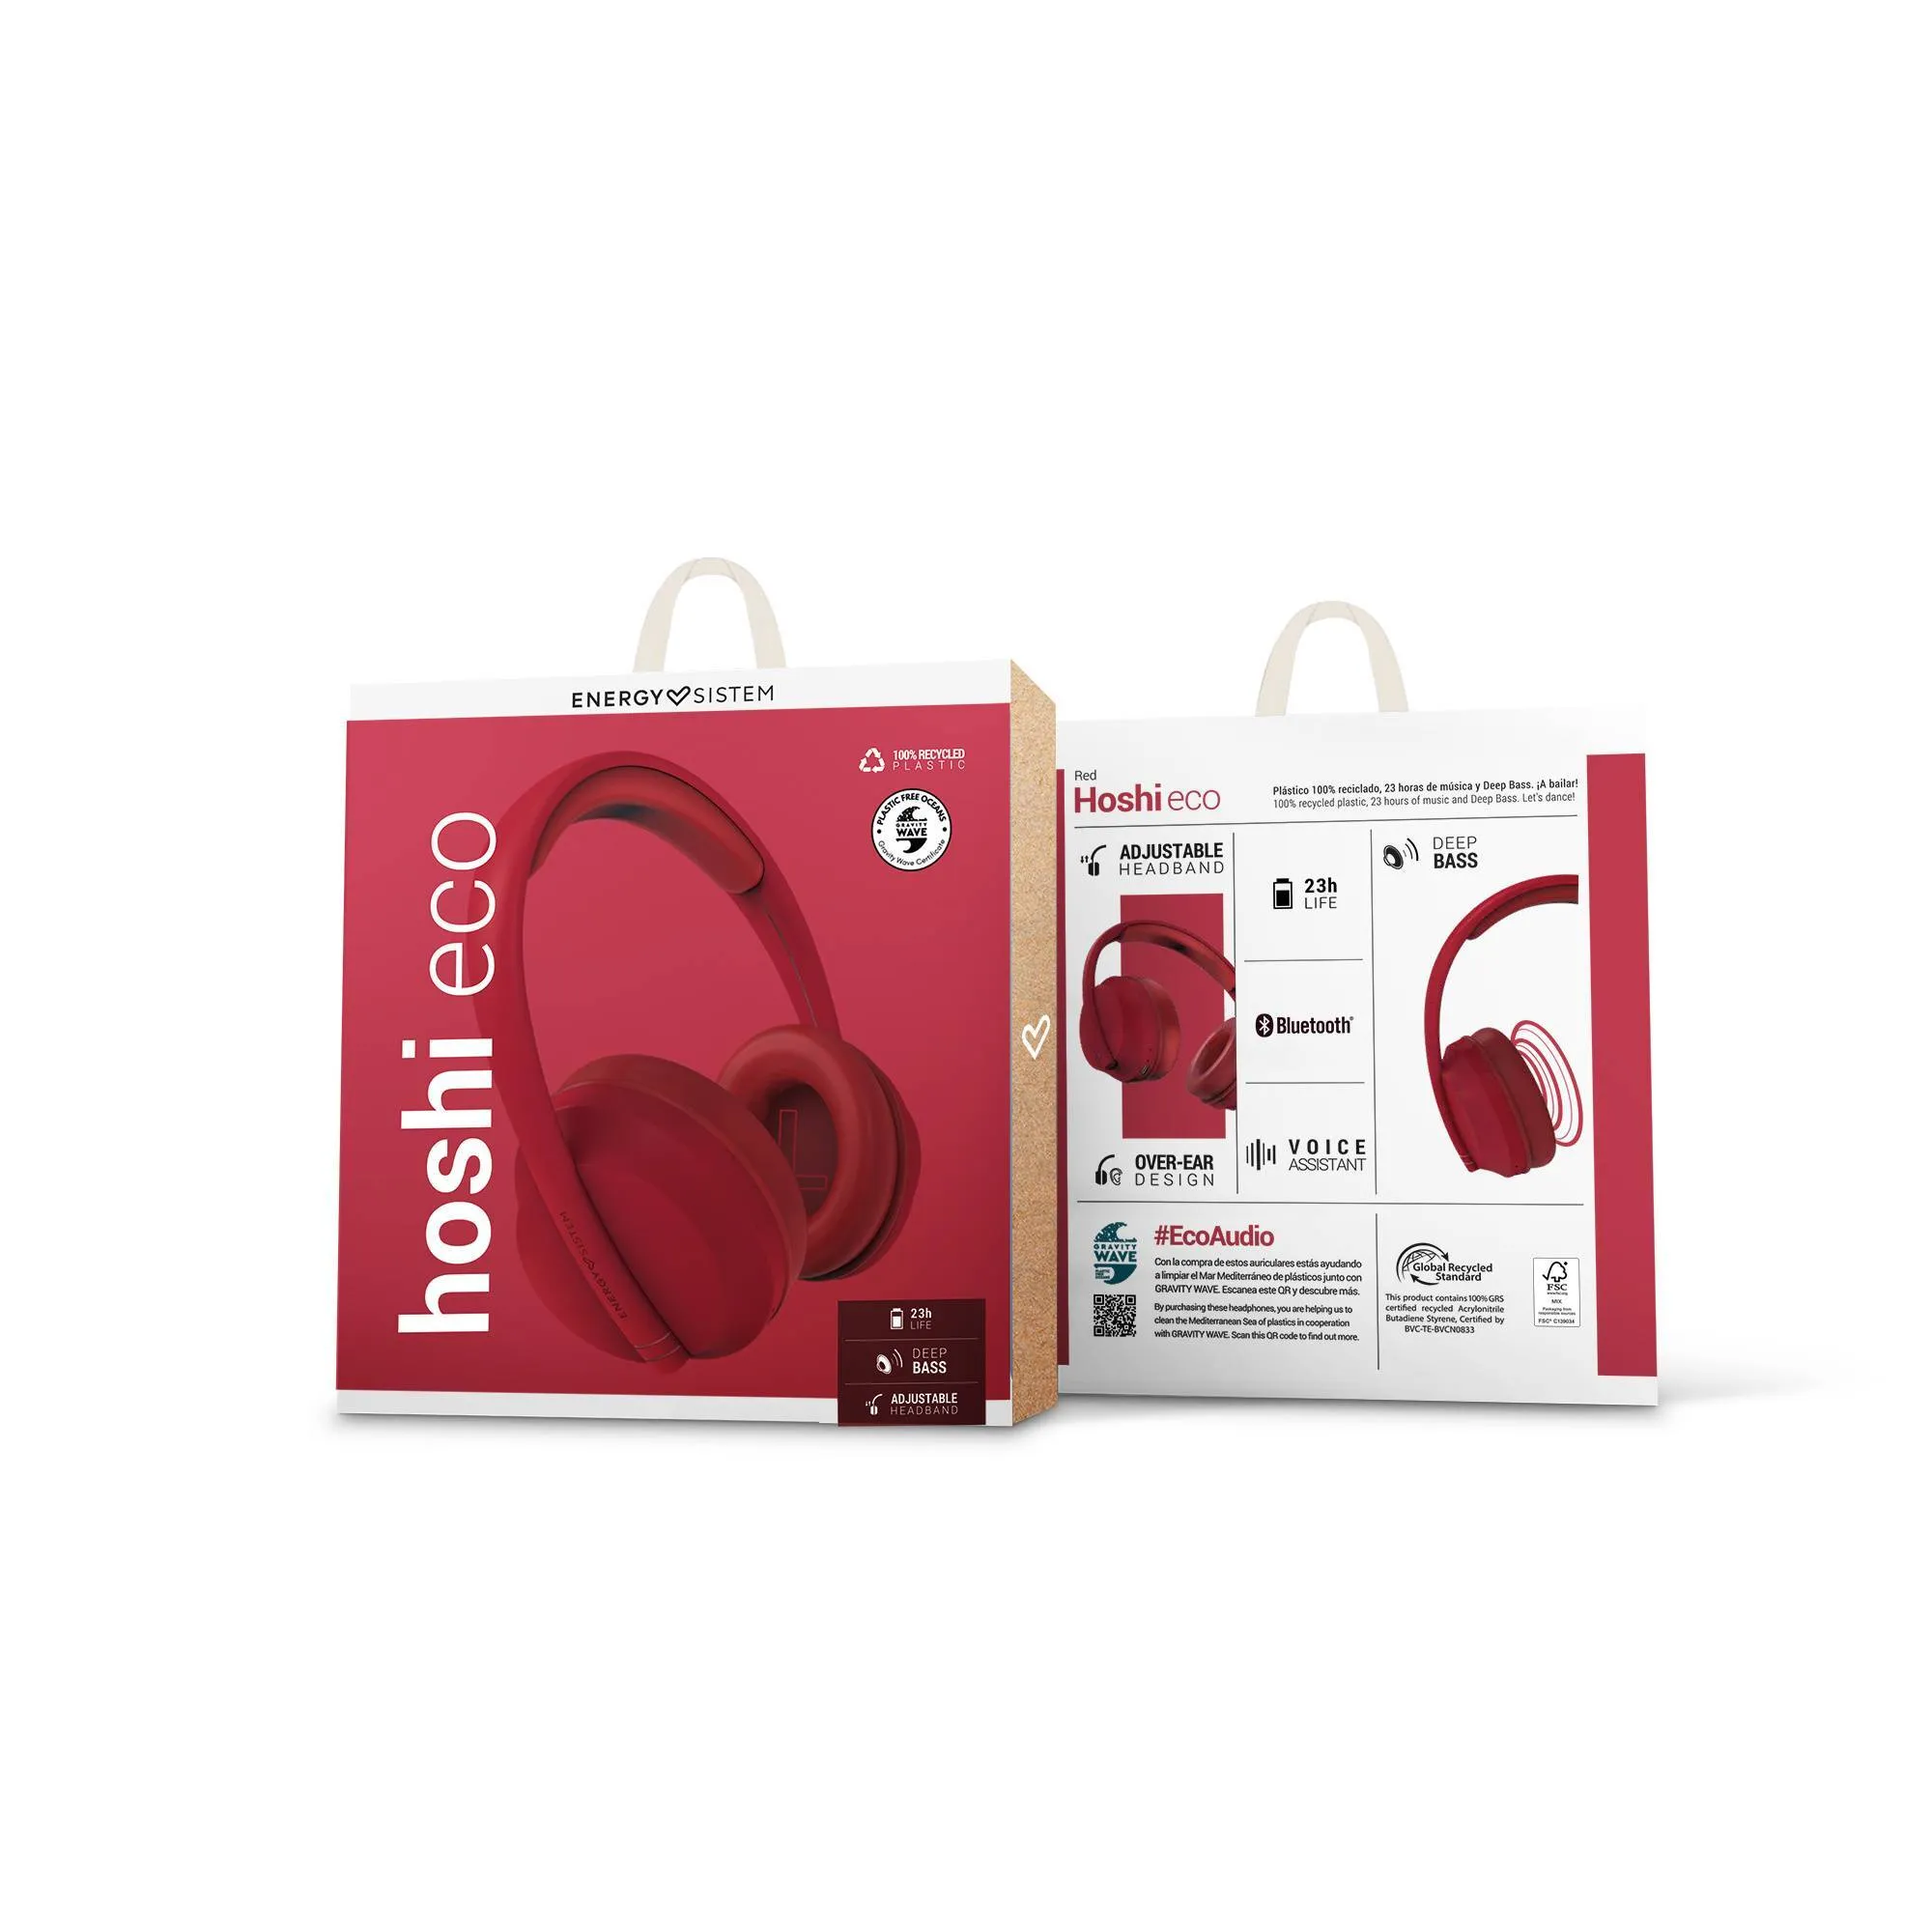 Hoshi ECO Bluetooth headphones' packaging